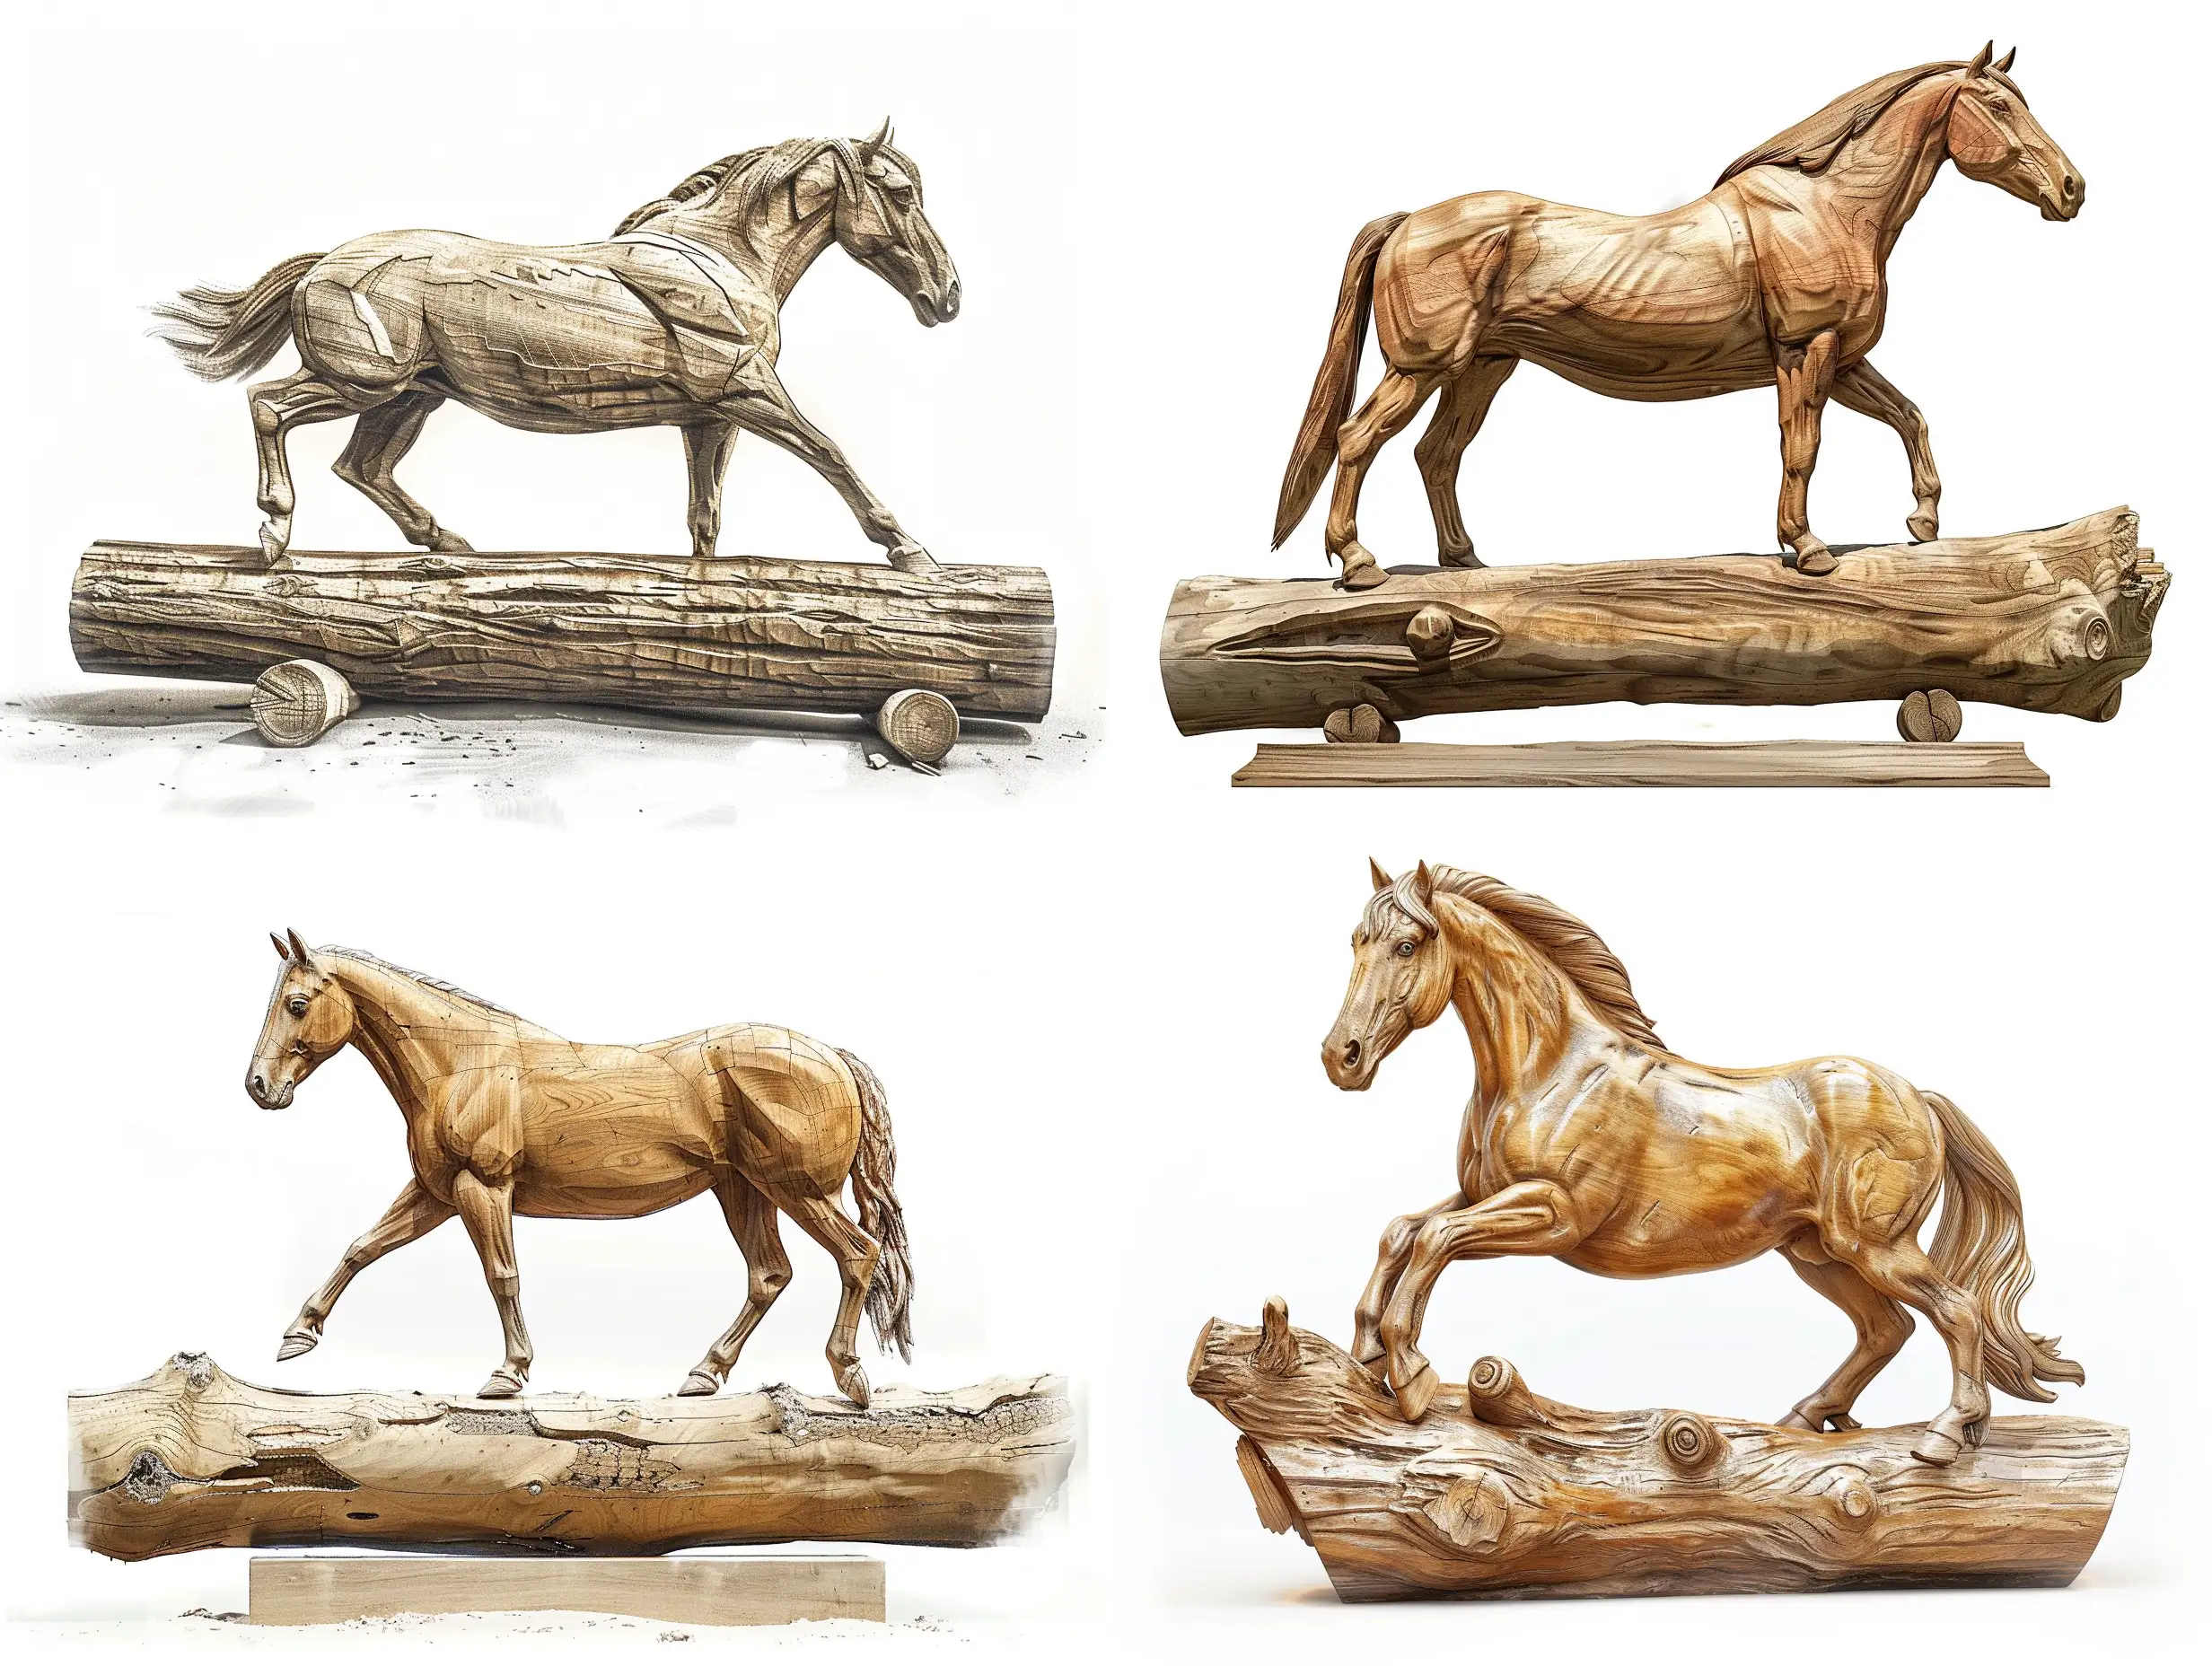 Professional-Wooden-Horse-Sculpture-Carving-on-Log-Realistic-8K-Render